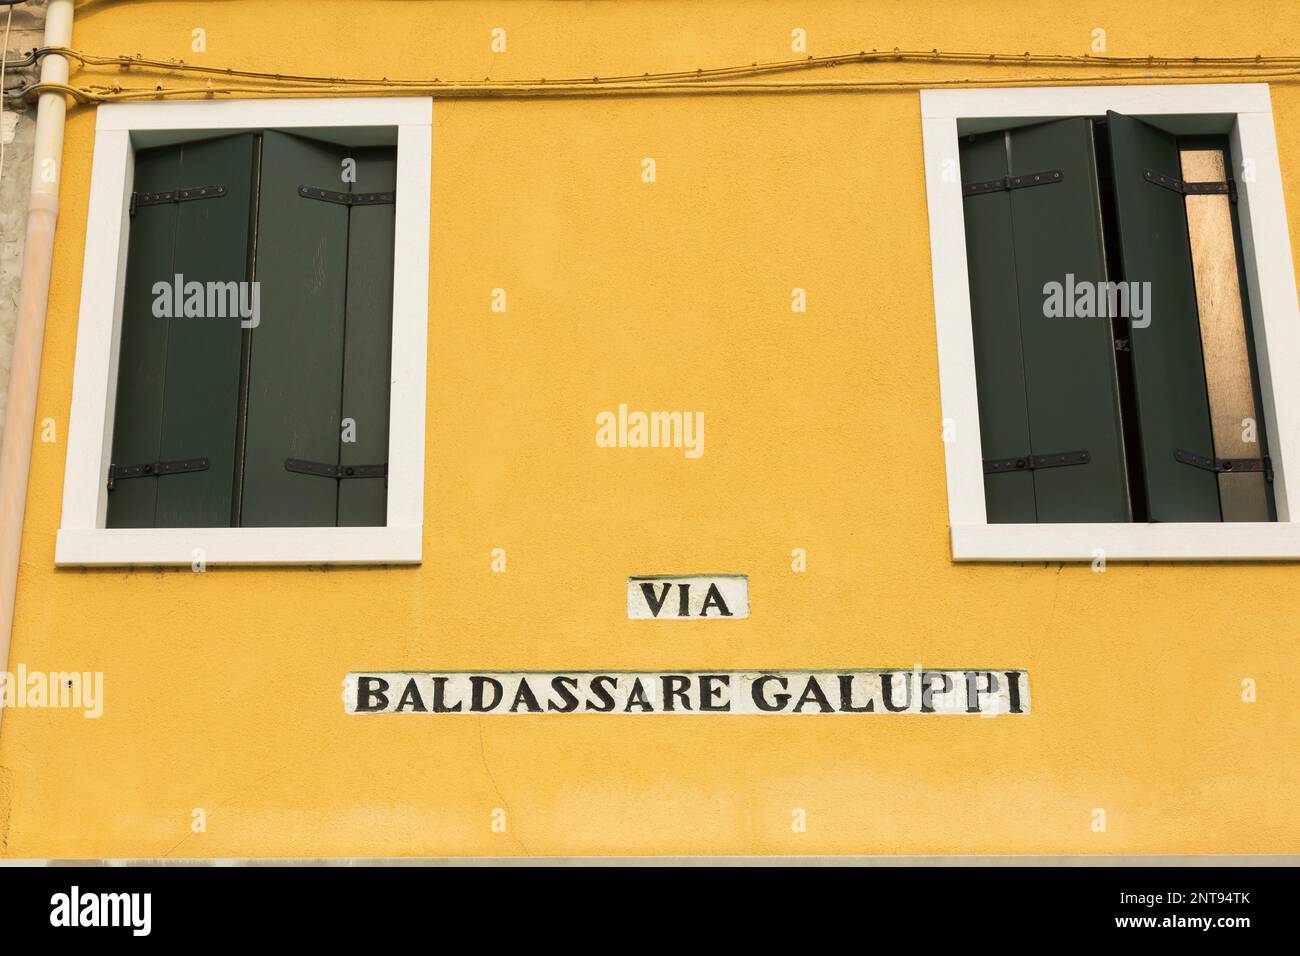 Via Baldassare Galuppi inscription on yellow stucco exterior house wall with green wooden shutters, Piazza Baldassare Galuppi, Burano Island, Italy. Stock Photo